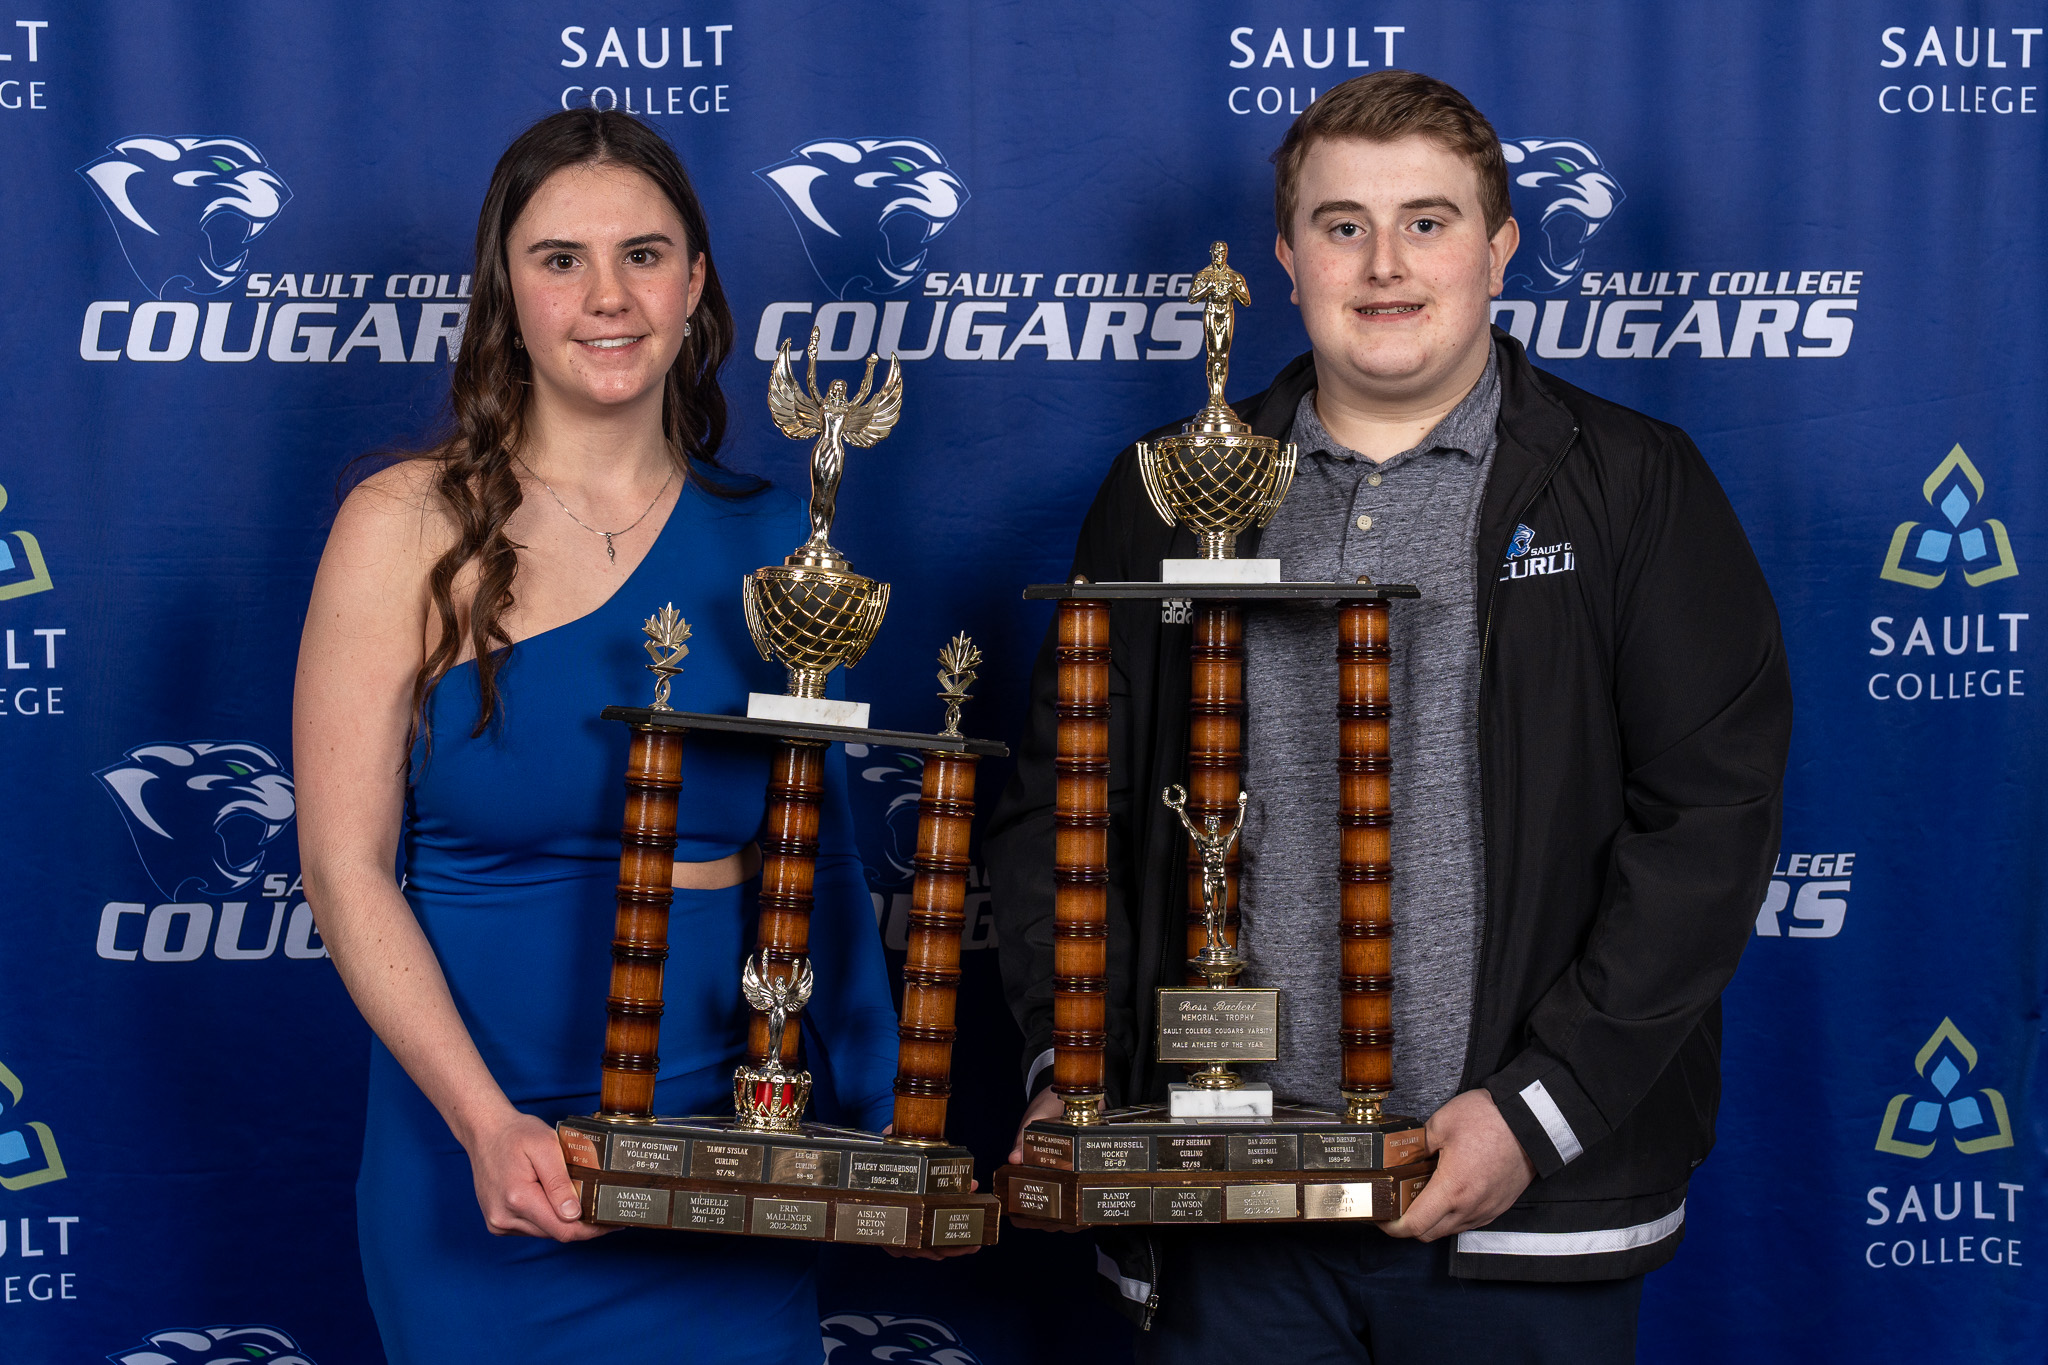 Sault College Athletics Celebrates Student-Athletes at Annual Awards Banquet